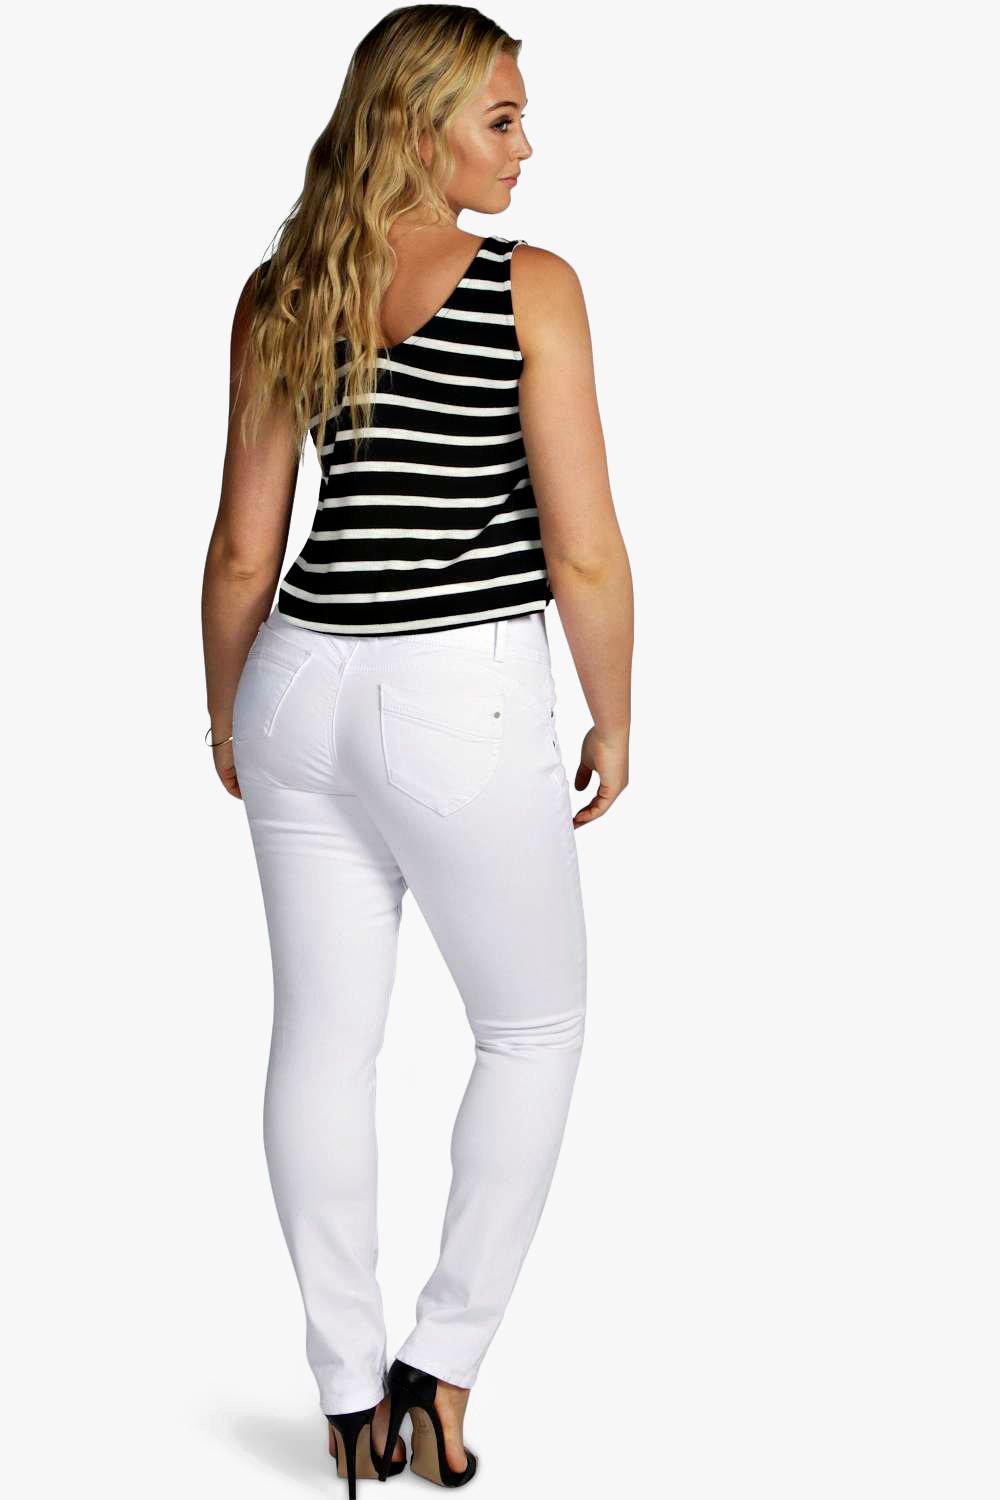 Boohoo Womens Plus Size Miley High Waisted Stretch Skinny Jeans In Denim Blue | eBay